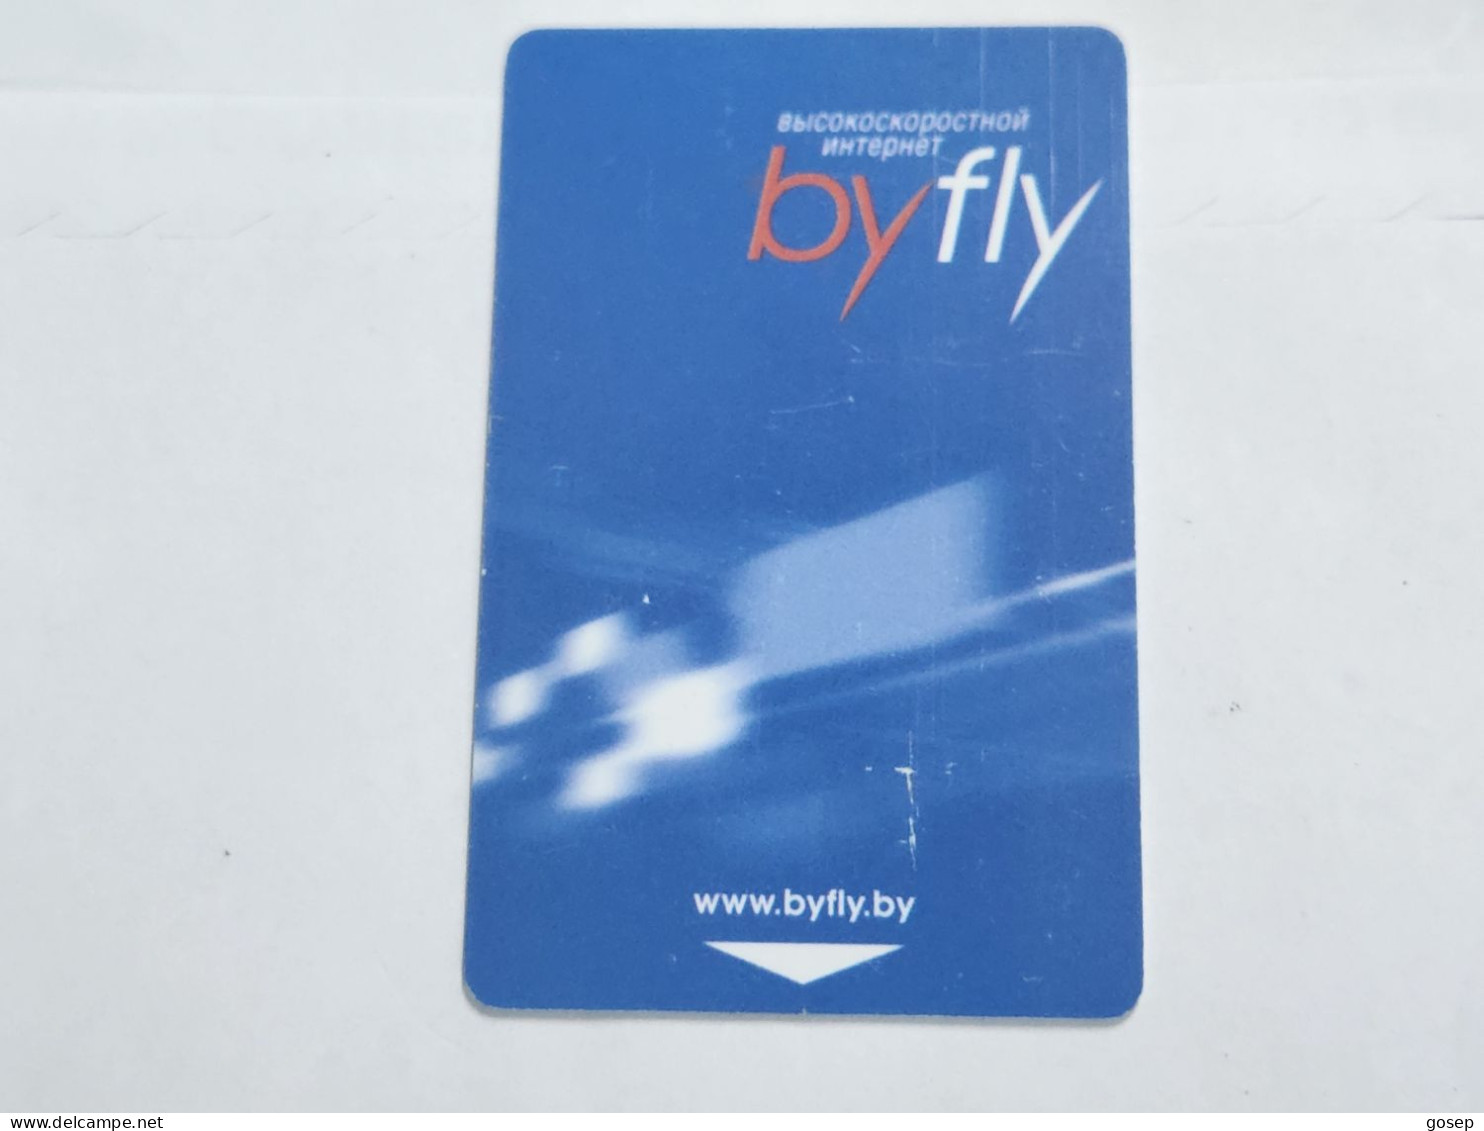 BELARUS-(BY-BLT-168b)-Byfly-High-Speed Internet-(143)(GOLD CHIP)(019177)(tirage-21.500)-used Card+1card Prepiad Free - Bielorussia